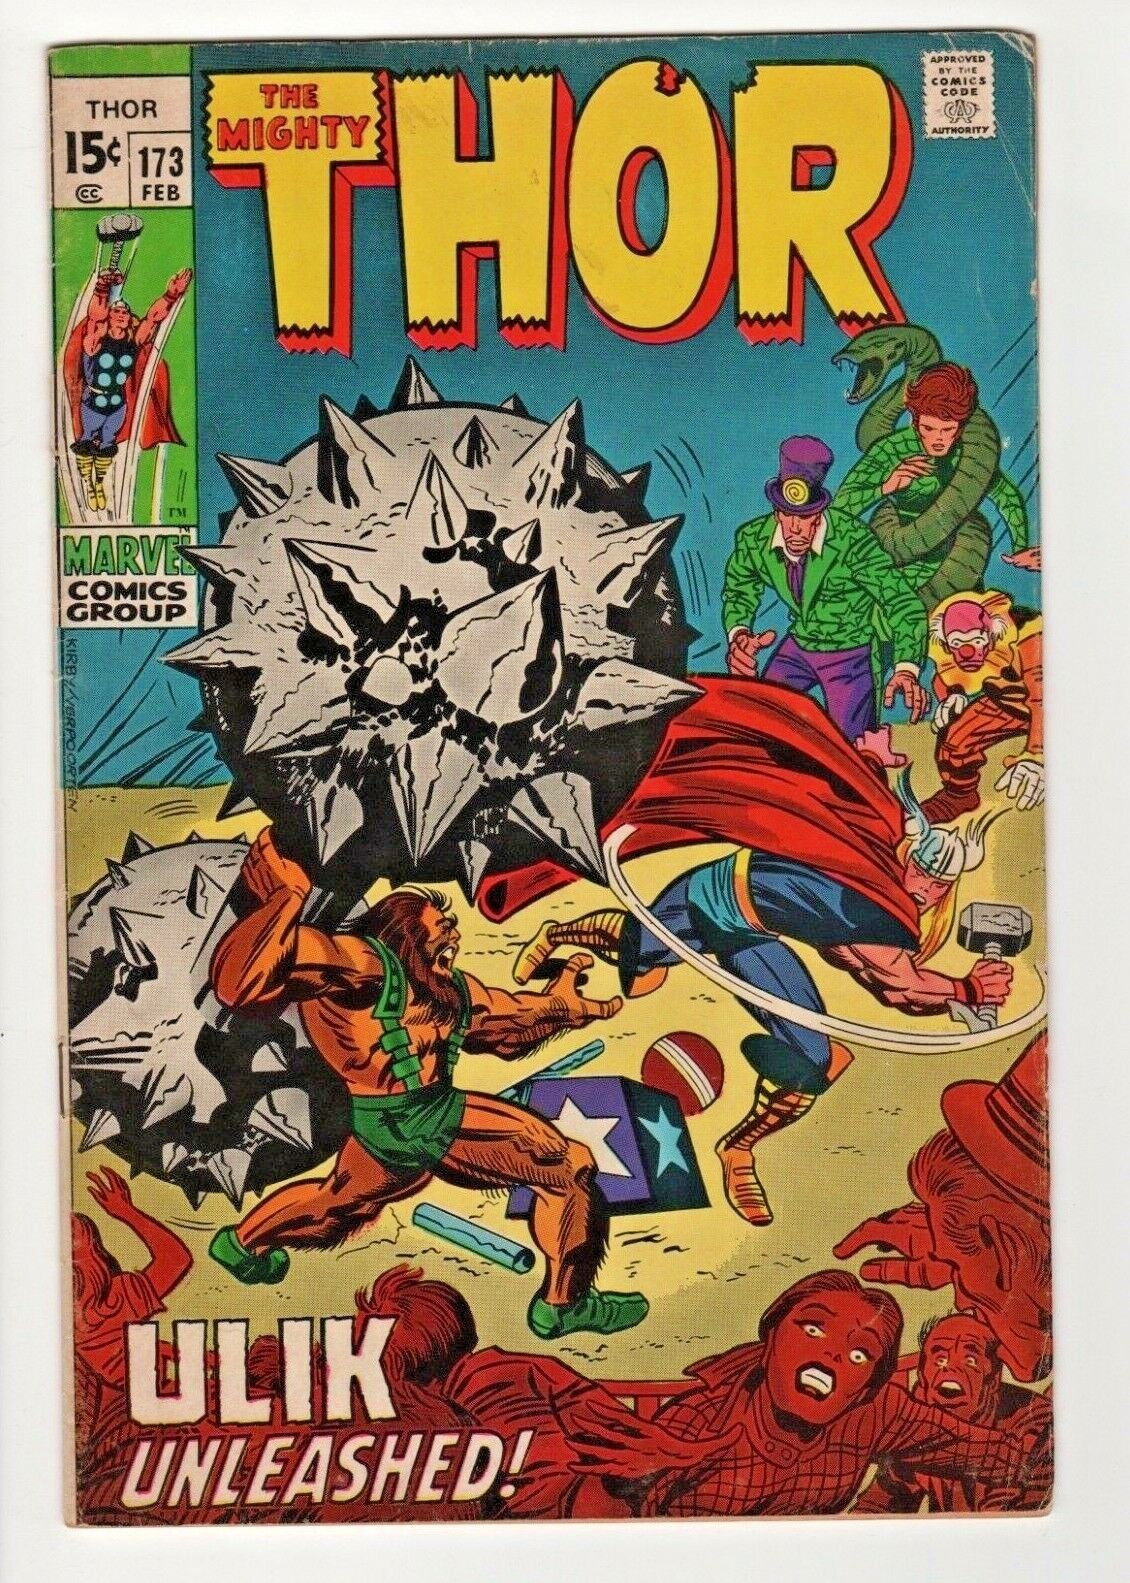 The Mighty Thor # 173 (Feb 1969, Marvel) Ulik Unleashed